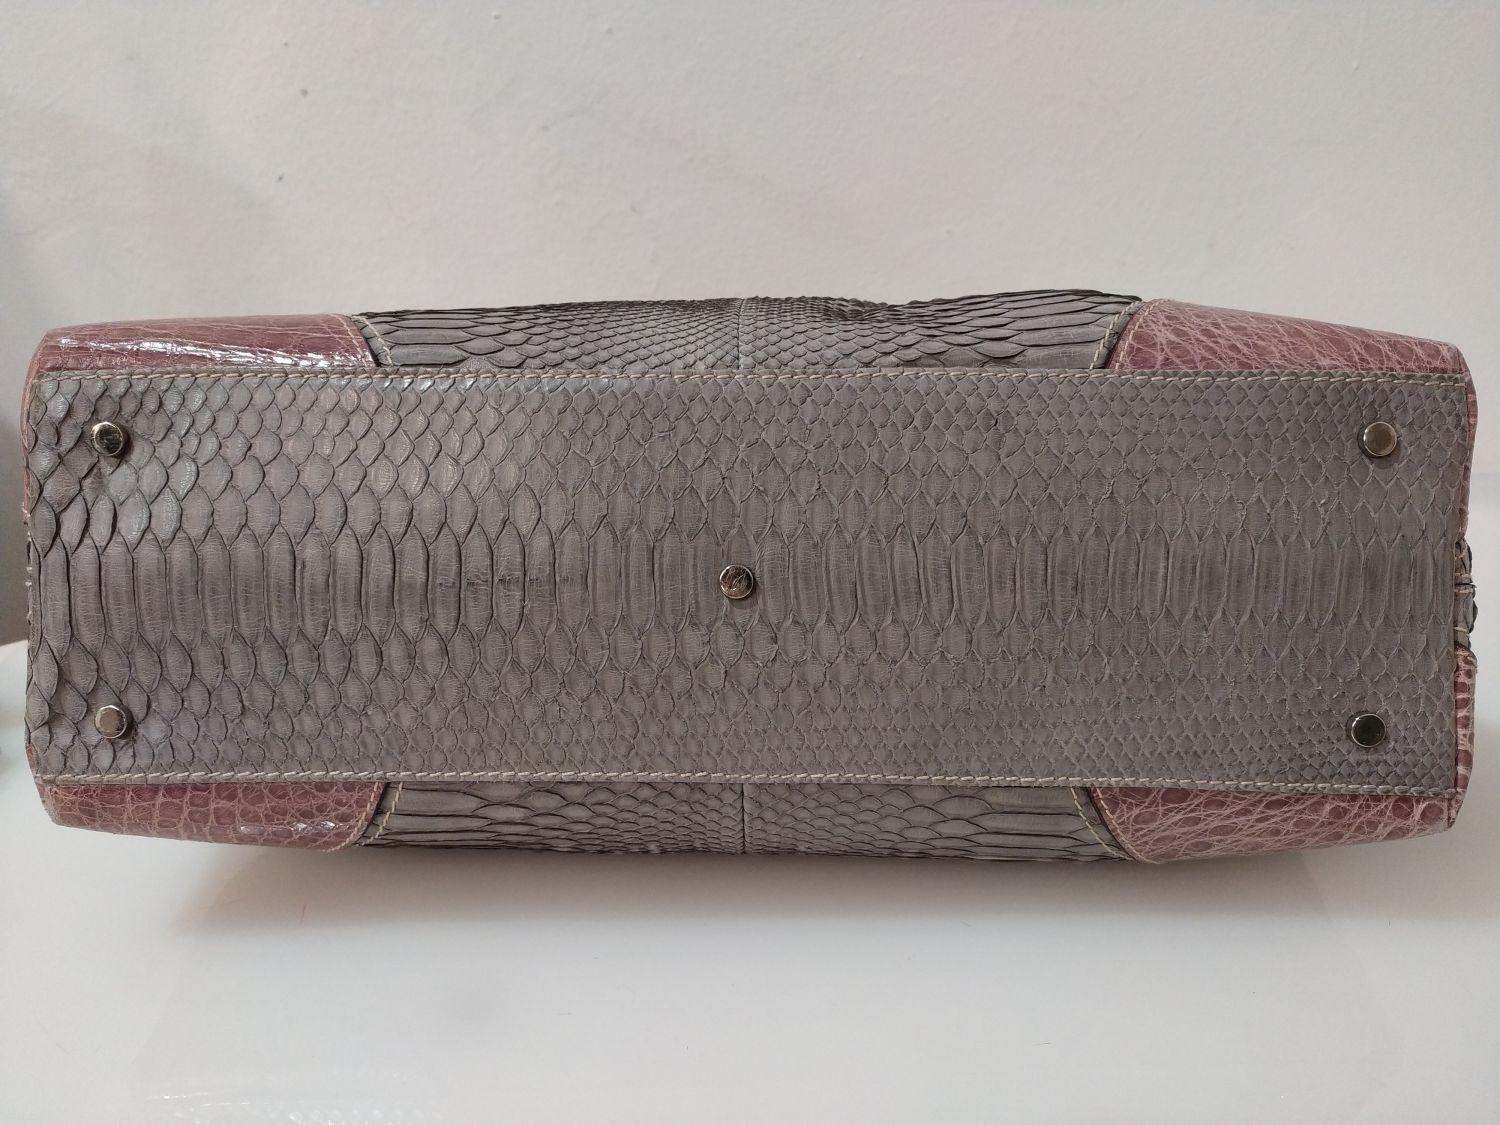 Italian Artisanal Python and Crocodile Bag In Excellent Condition For Sale In Gazzaniga (BG), IT